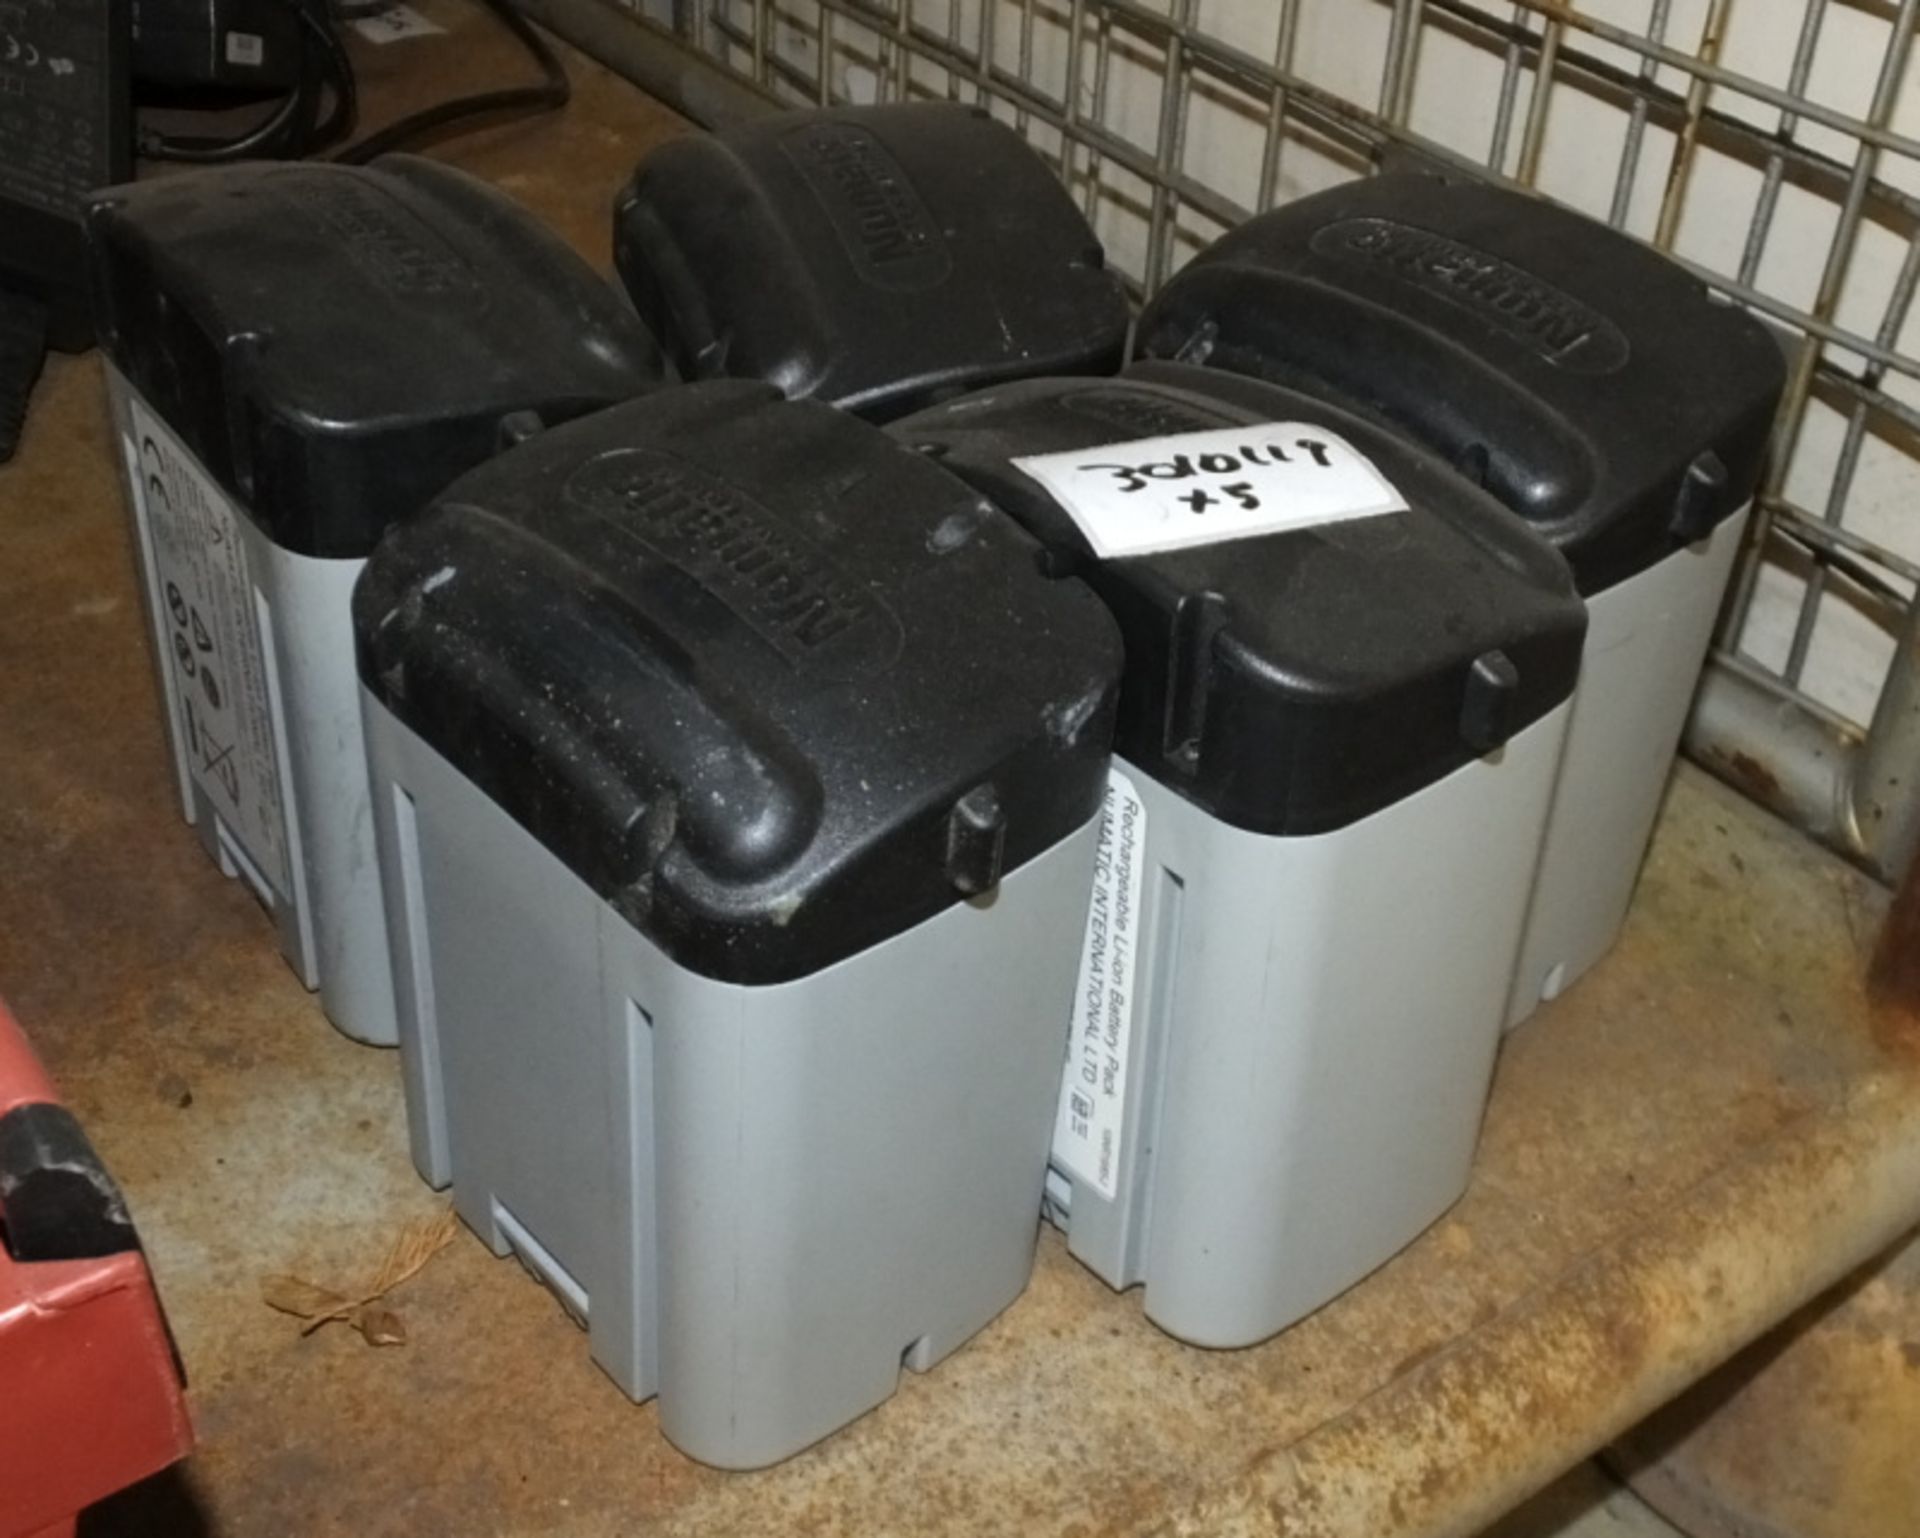 5x Rechargable Li-Ion Battery Packs 902440, 22x Numatic Inter. Li-Ion Recharagable Battery - Image 2 of 5